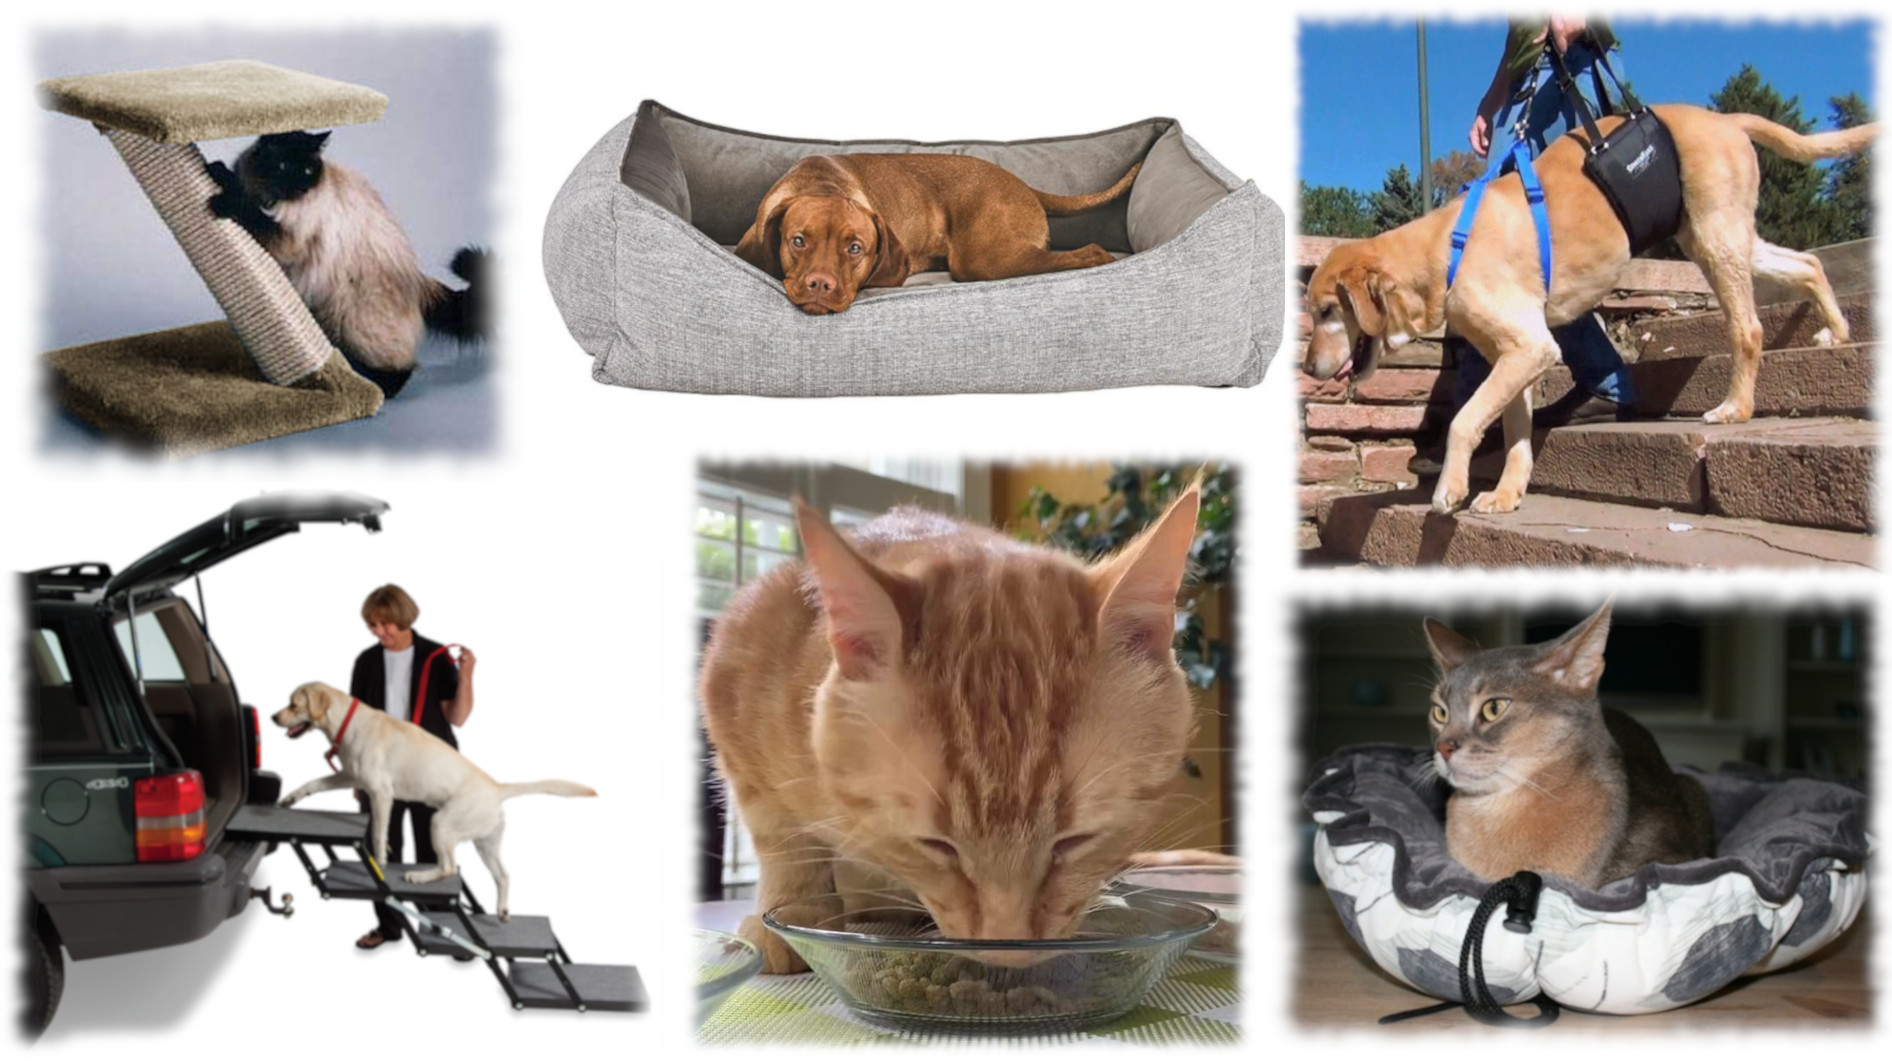 Care for senior pets - product sampling